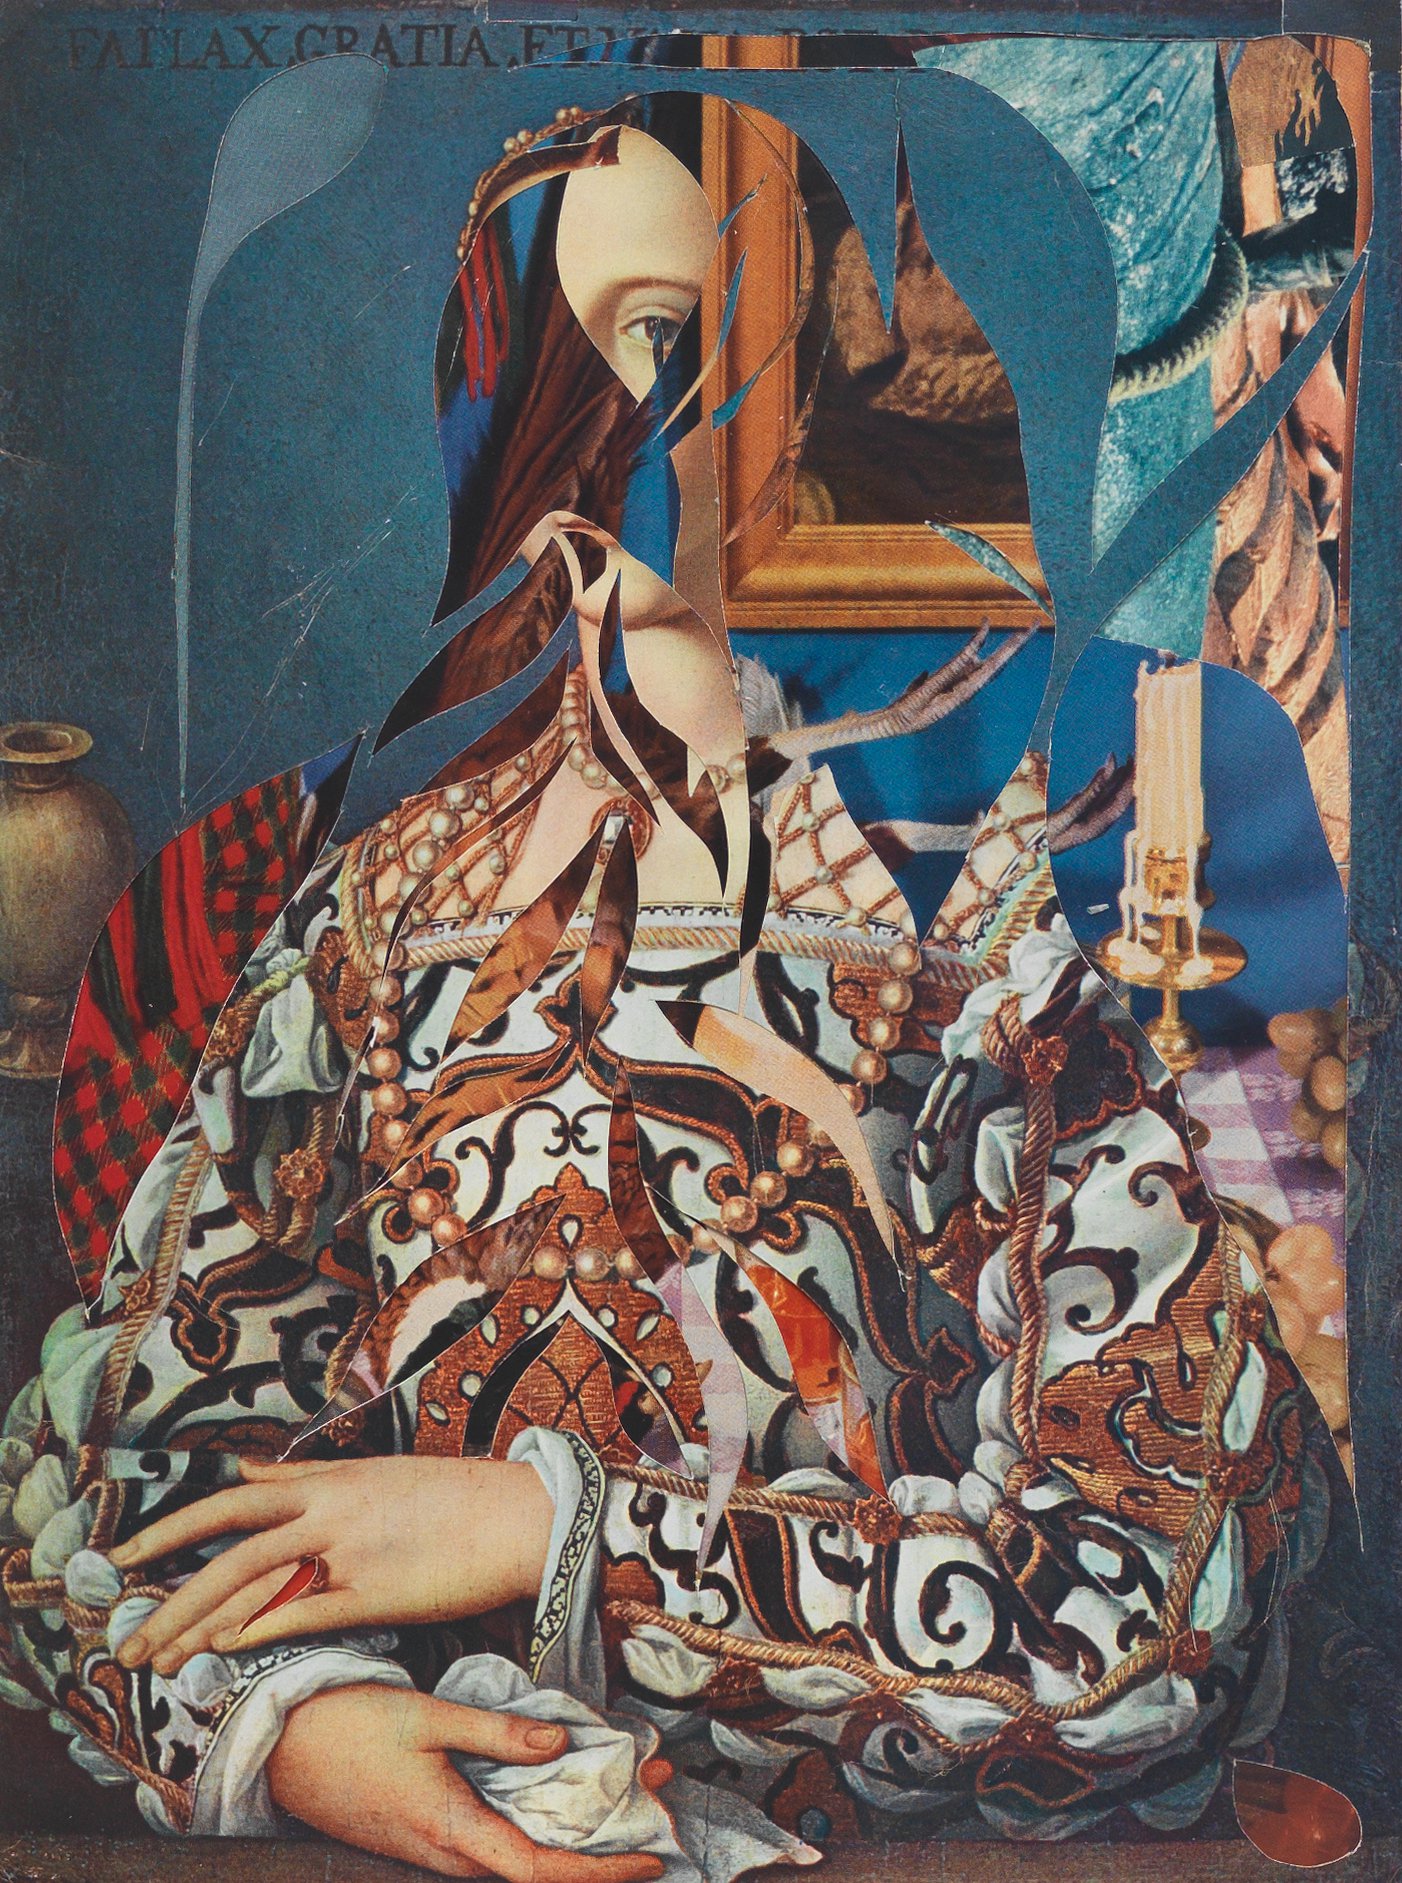 Haris Epaminonda, Untitled, framed paper collage, 52 x 42.5 cm framed (20 x 16.7 in framed), 2009